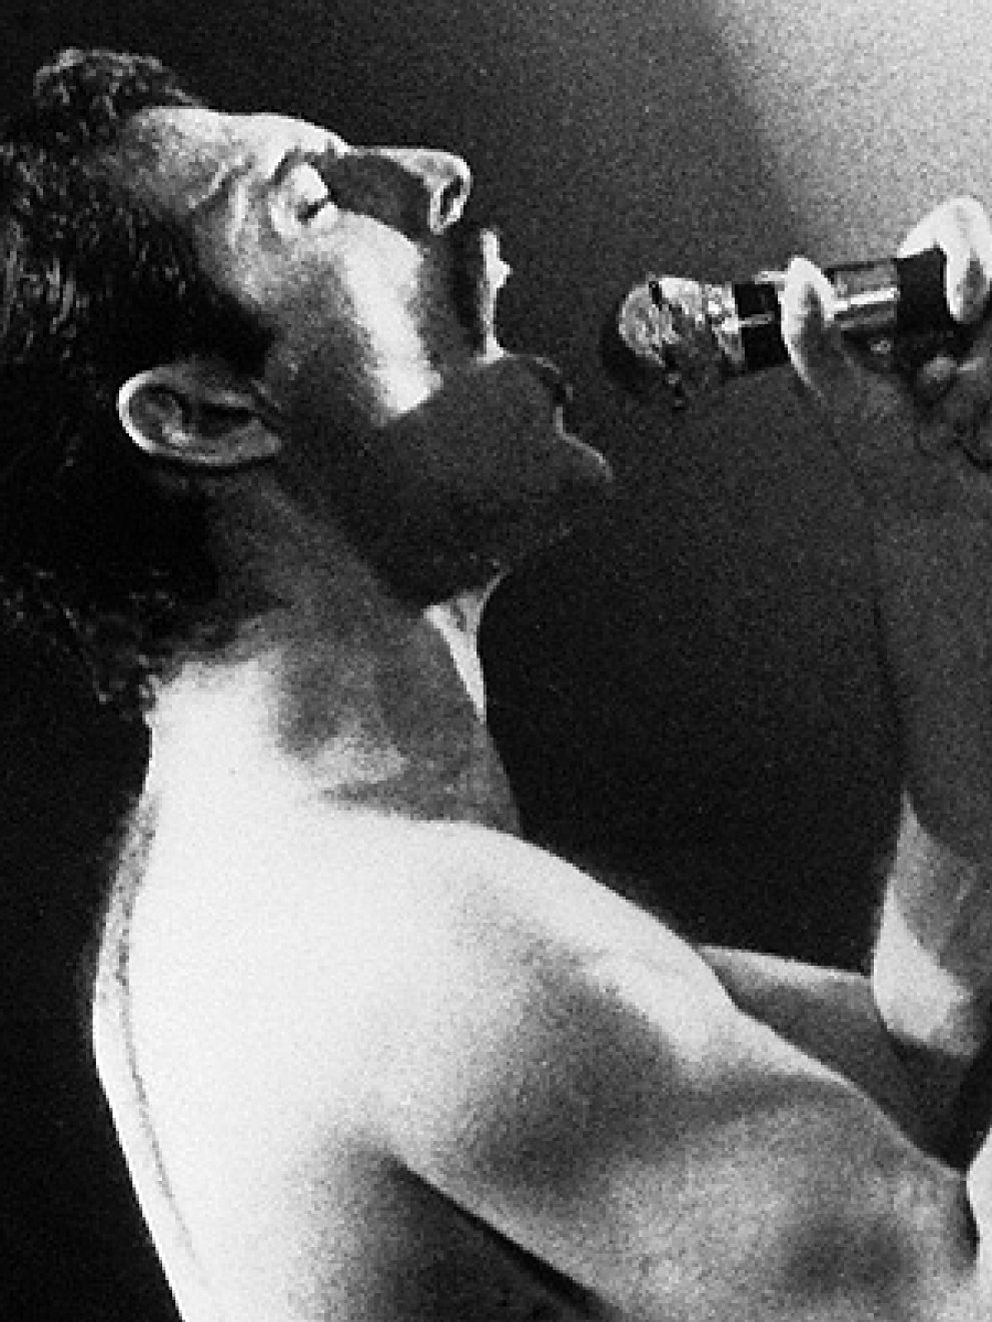 Foto: Freddie Mercury, si te reencarnas en carne, vuelve a reencarnarte en ti